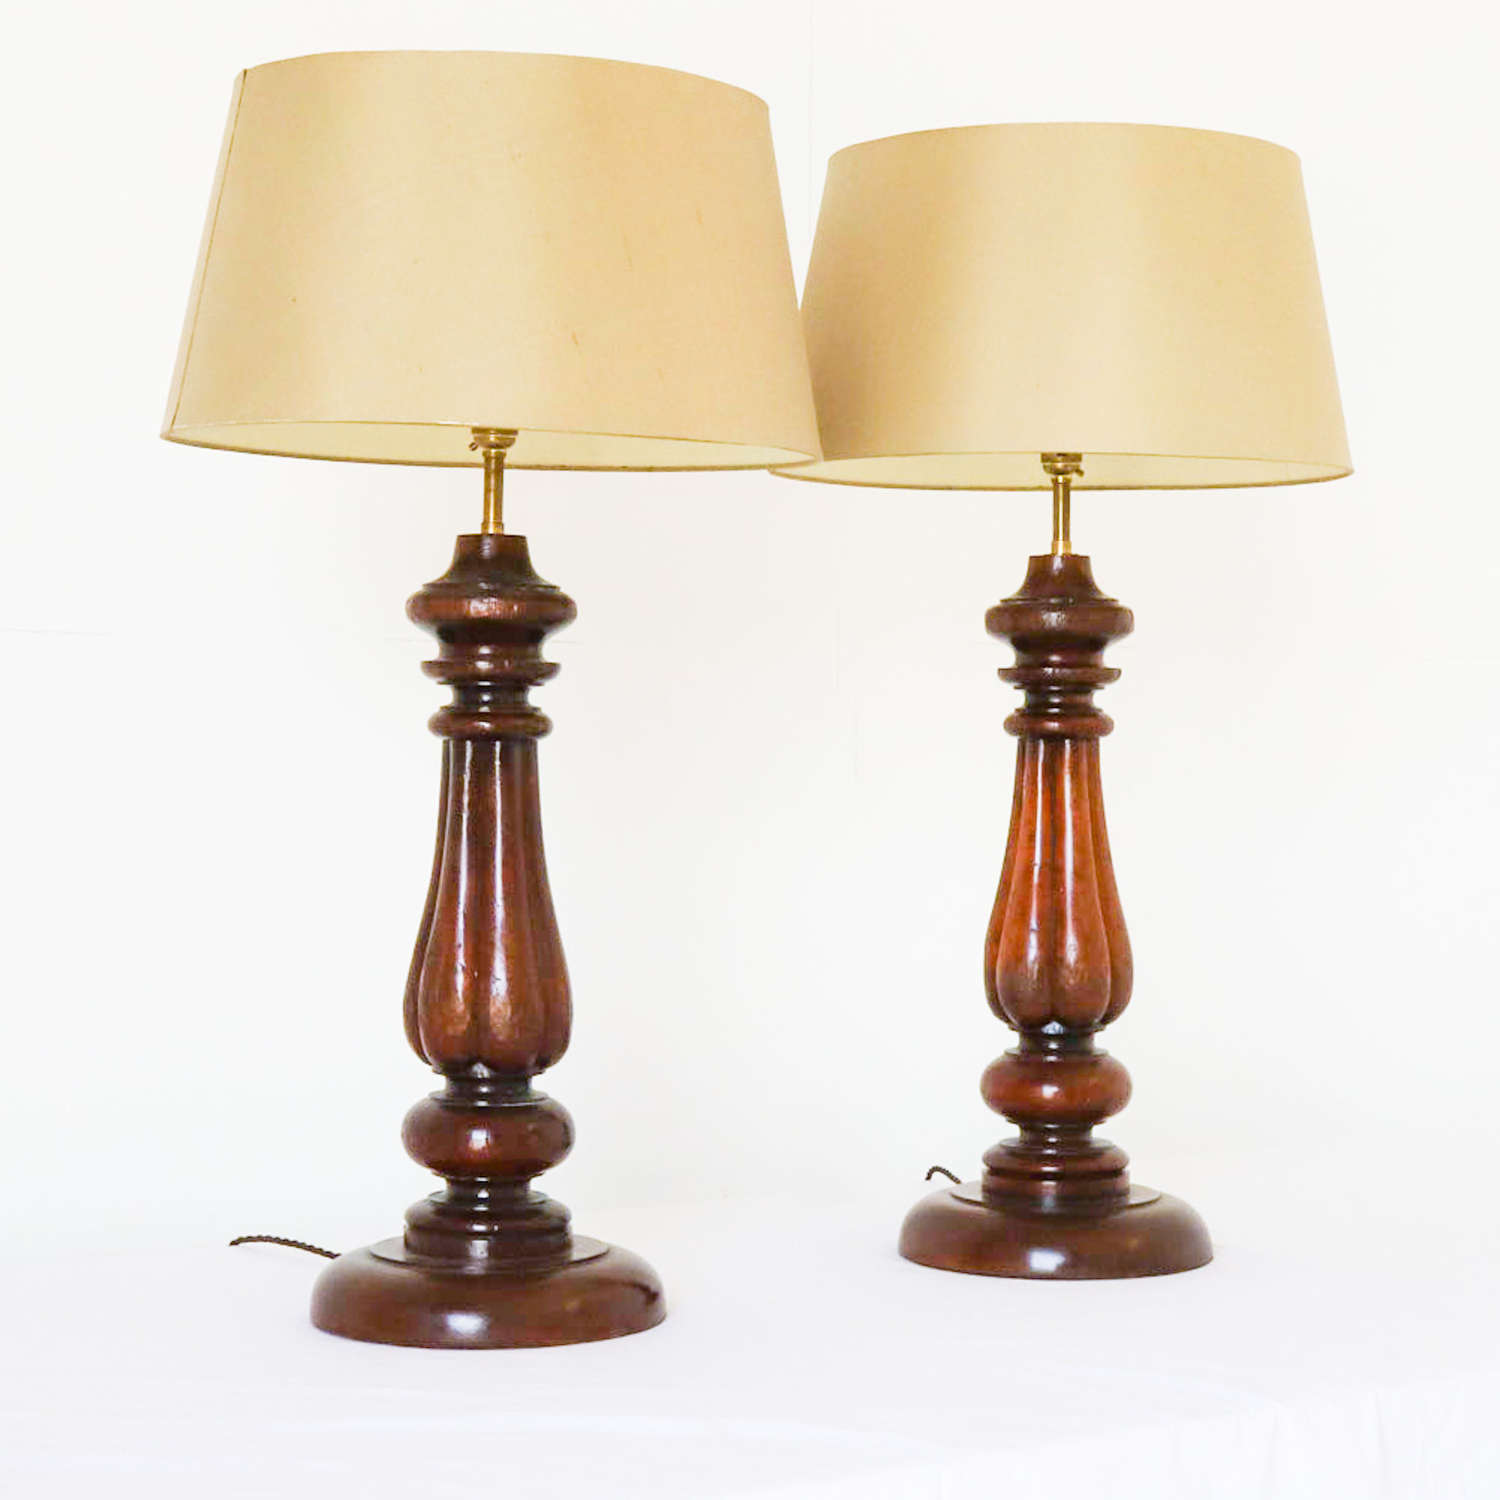 English 1880 pair of mahogany lamps from pair of Gillows legs